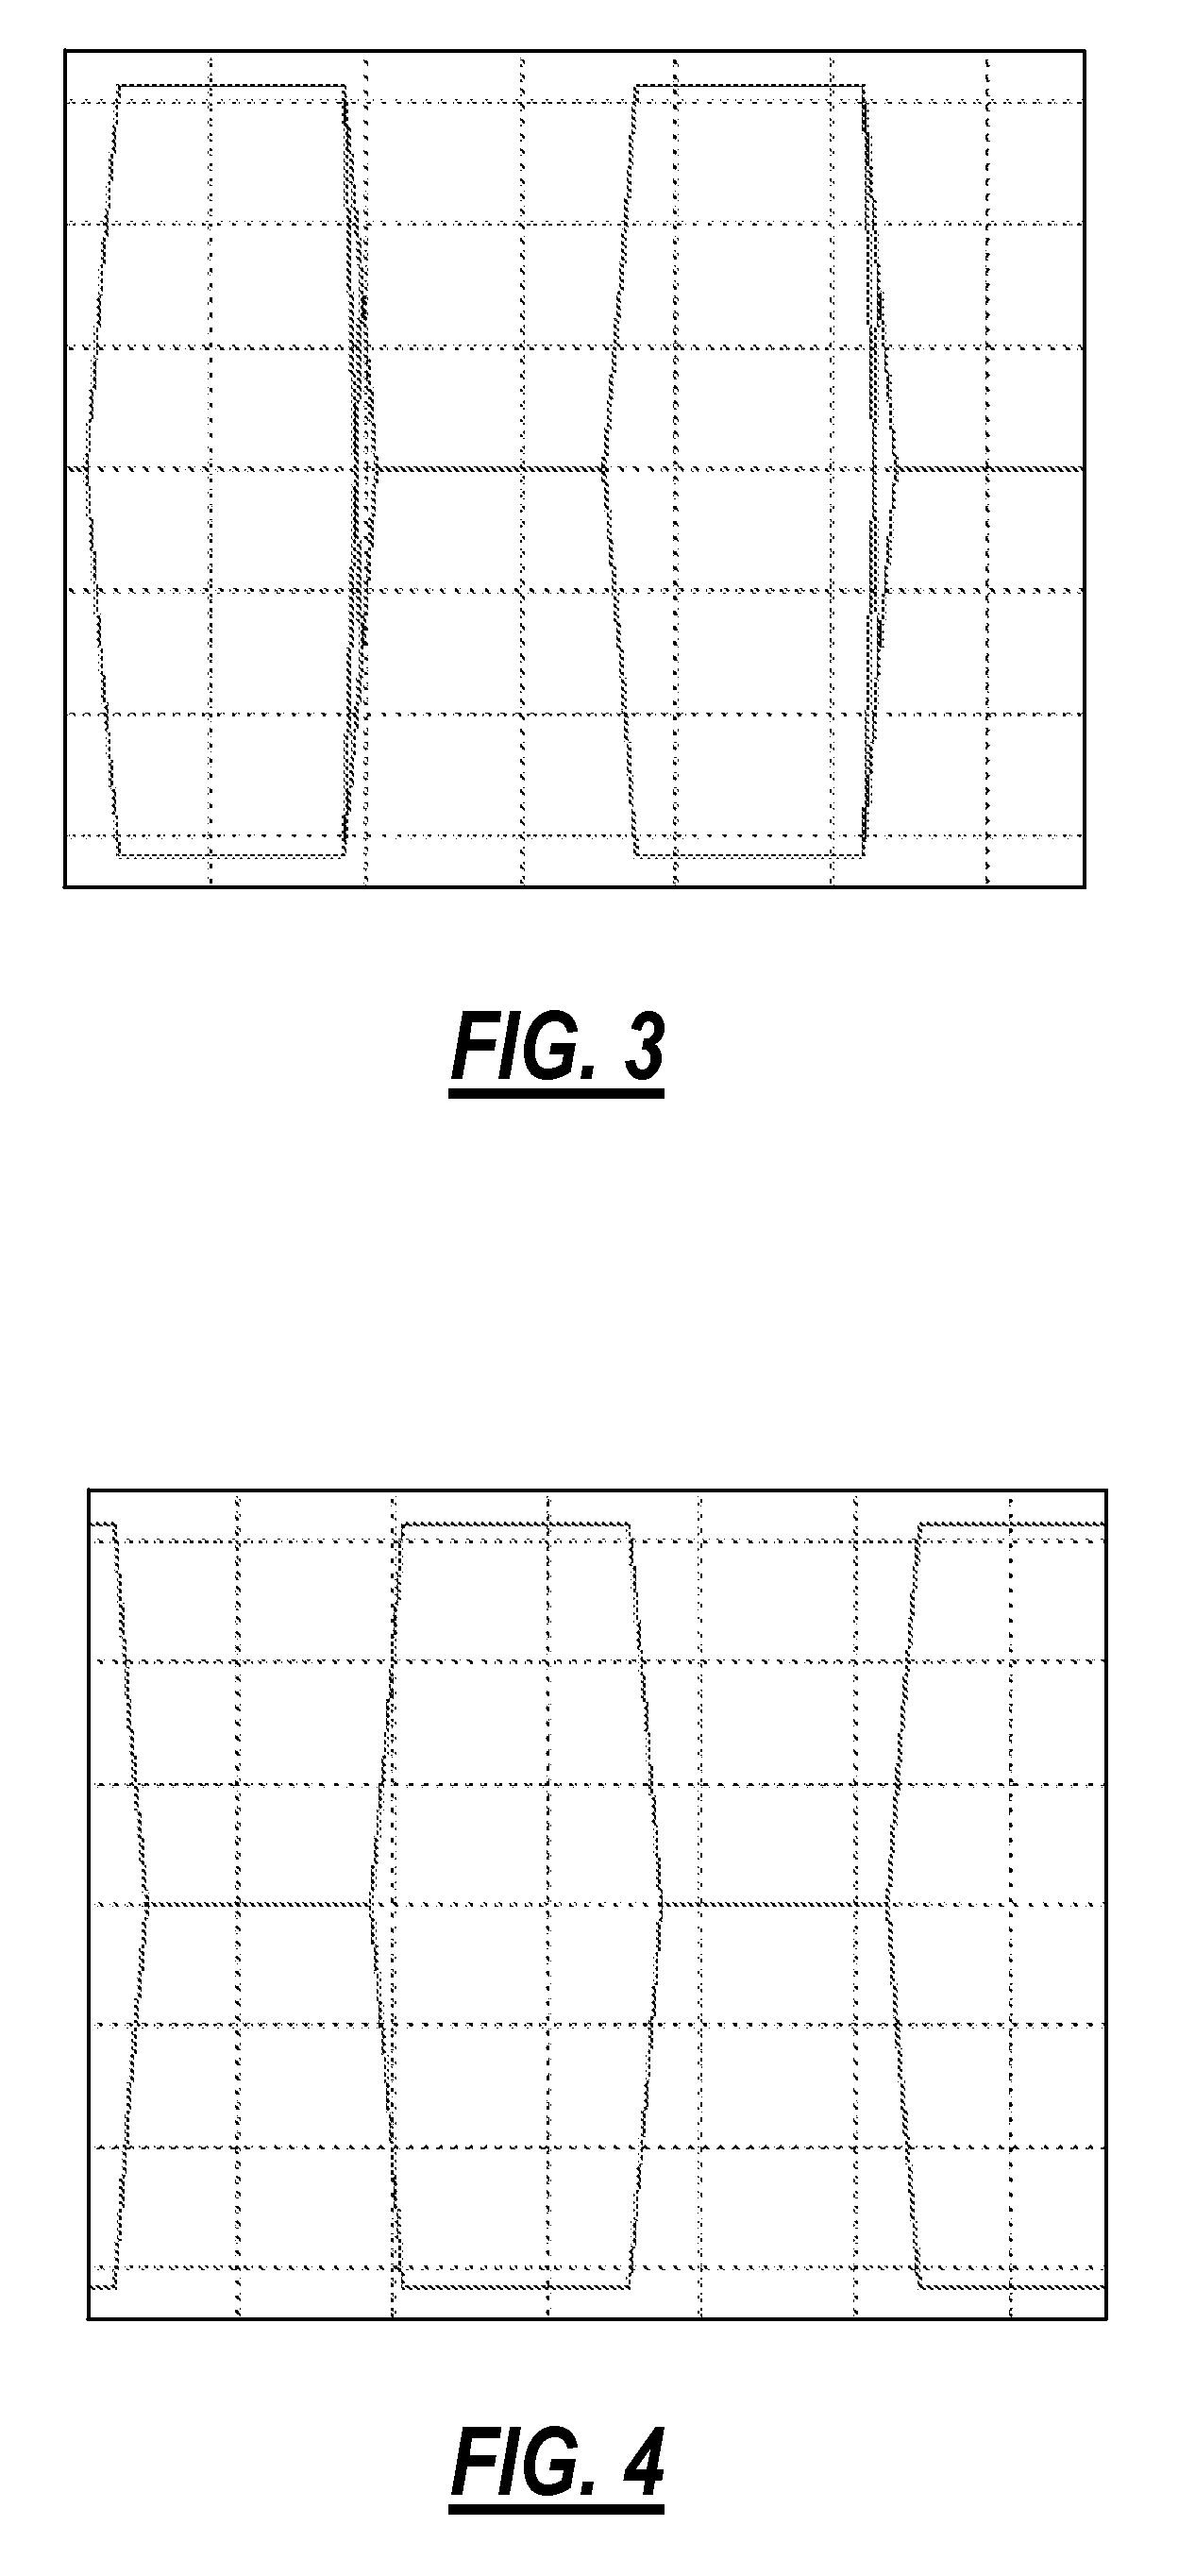 Multi-channel optical transceiver with offset quadrature amplitude modulation